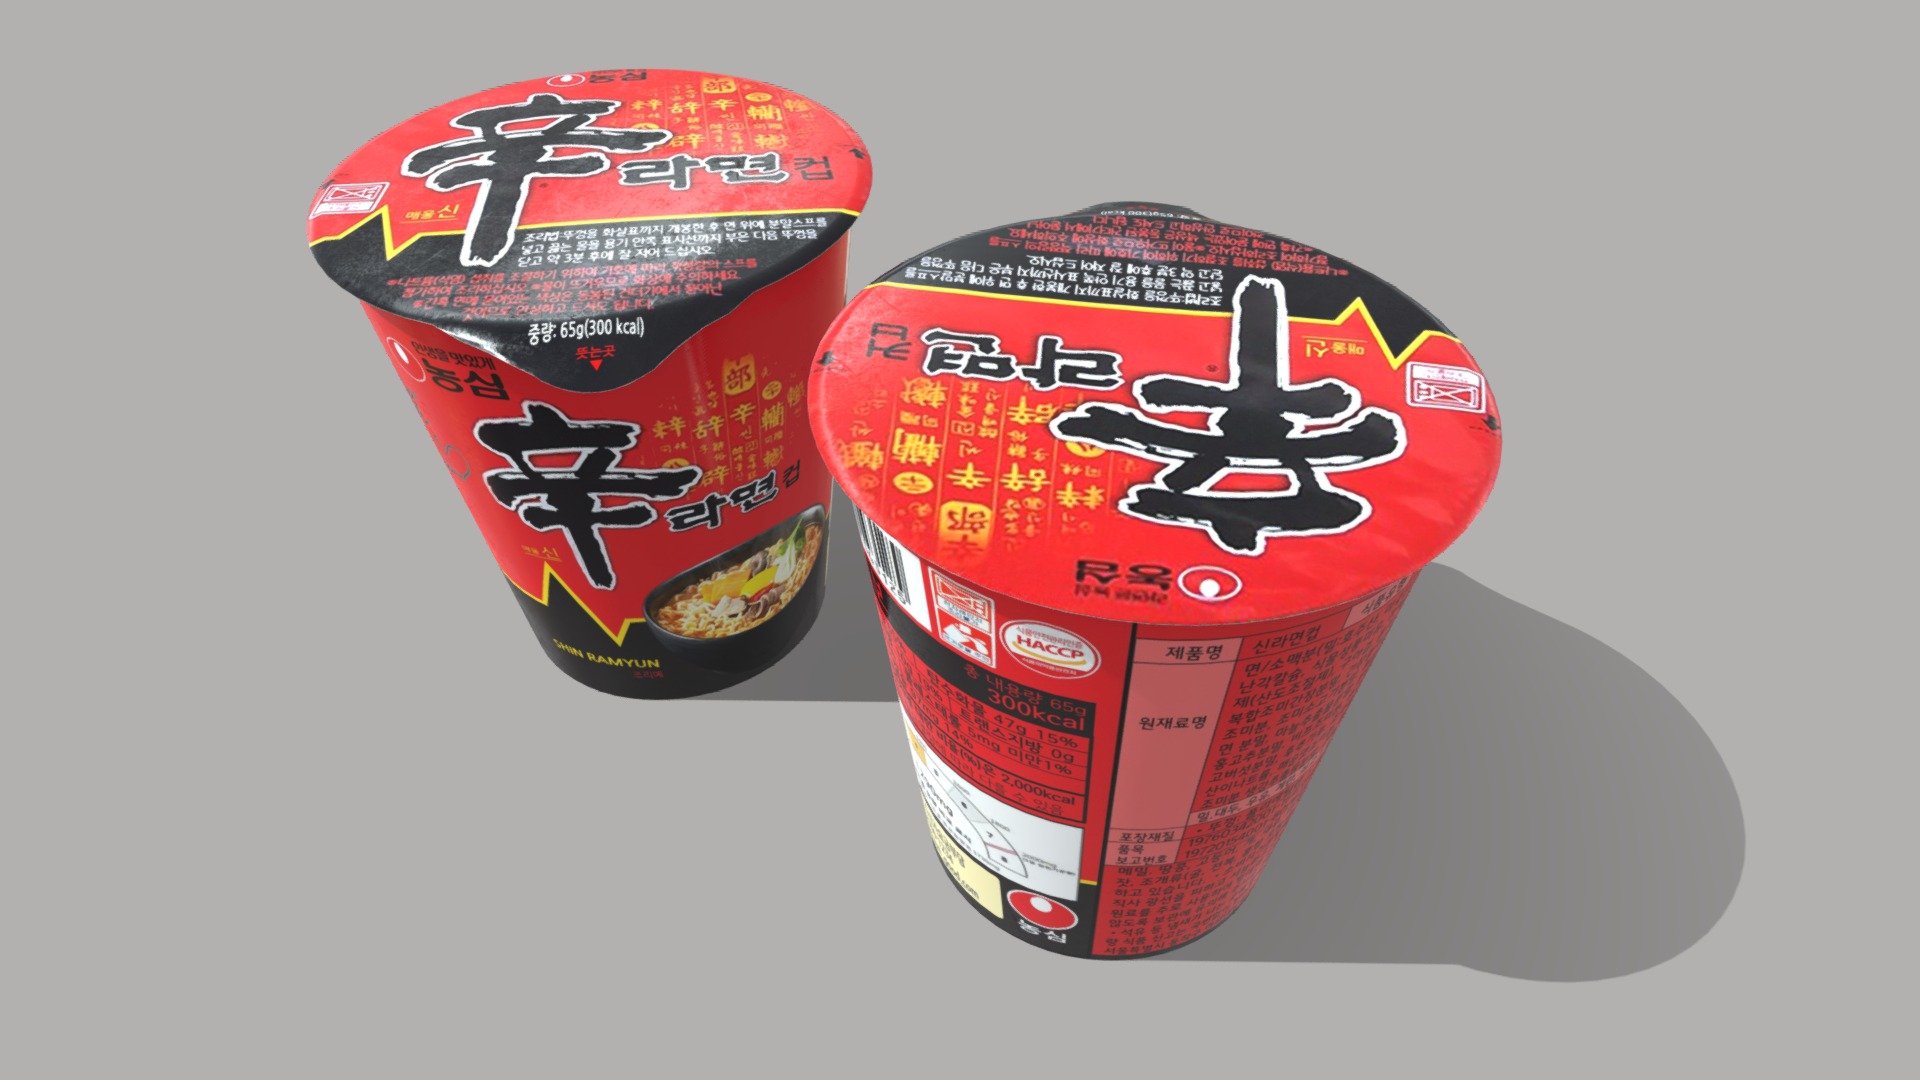 free models
korean cup noodle
신라면컵
한국 컵라면 - shin ramyun 신라면 - Download Free 3D model by clon6767 3d model